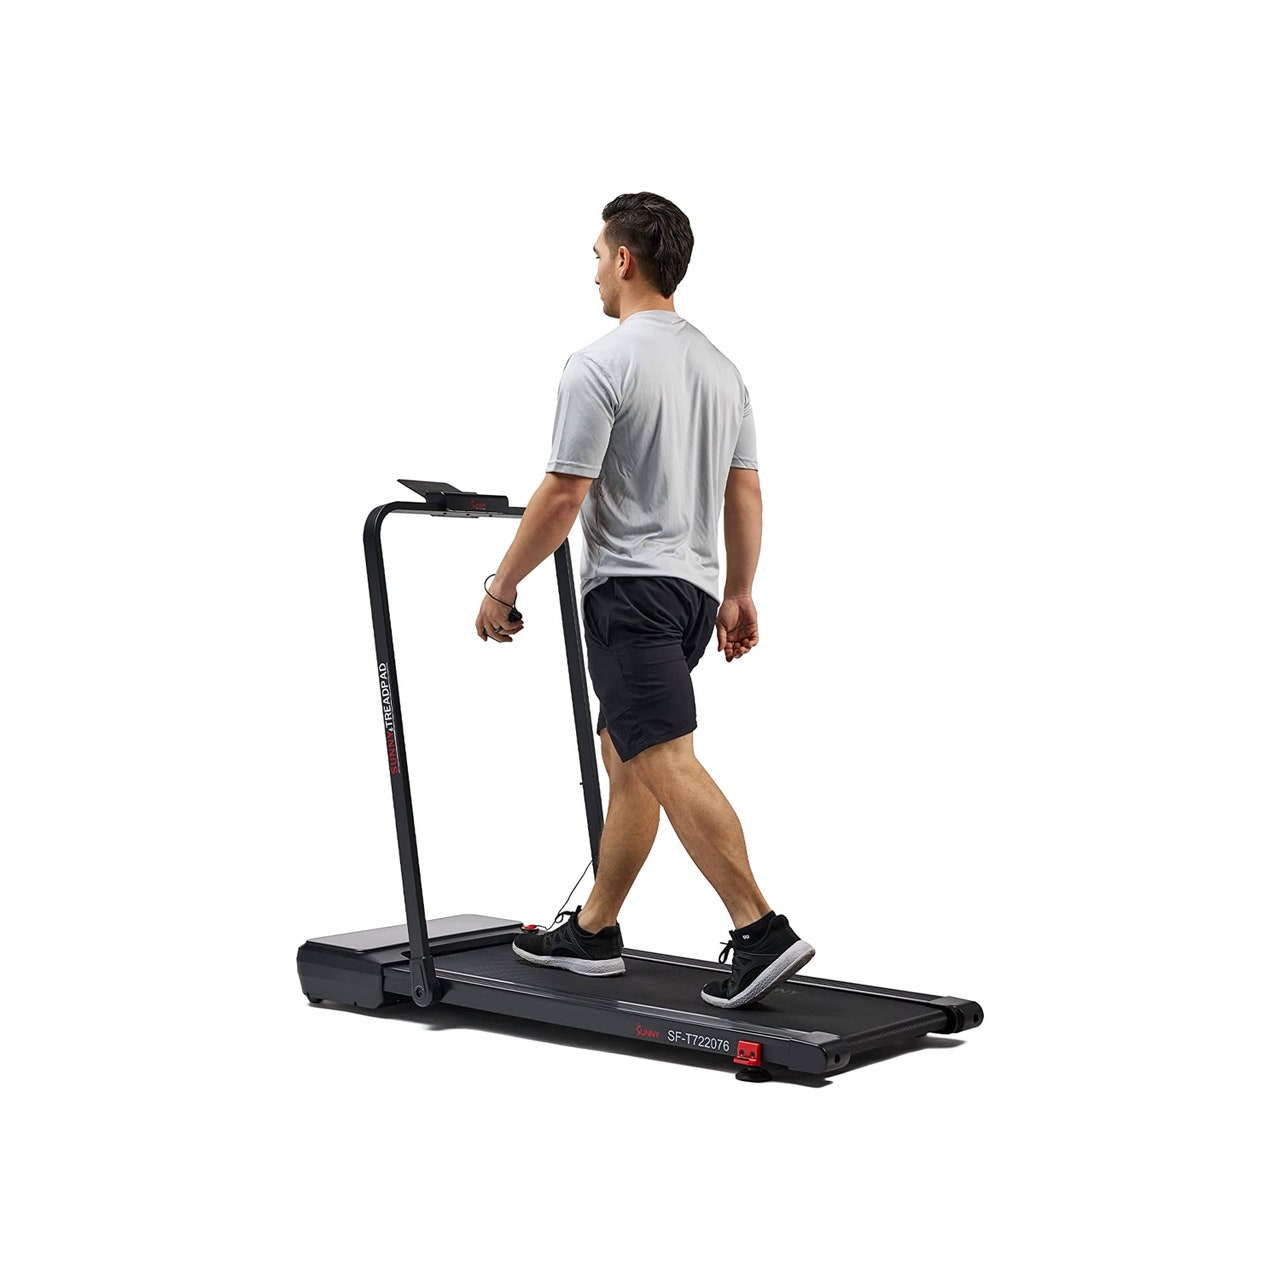 Sunny Health & Fitness treadmill treadmill